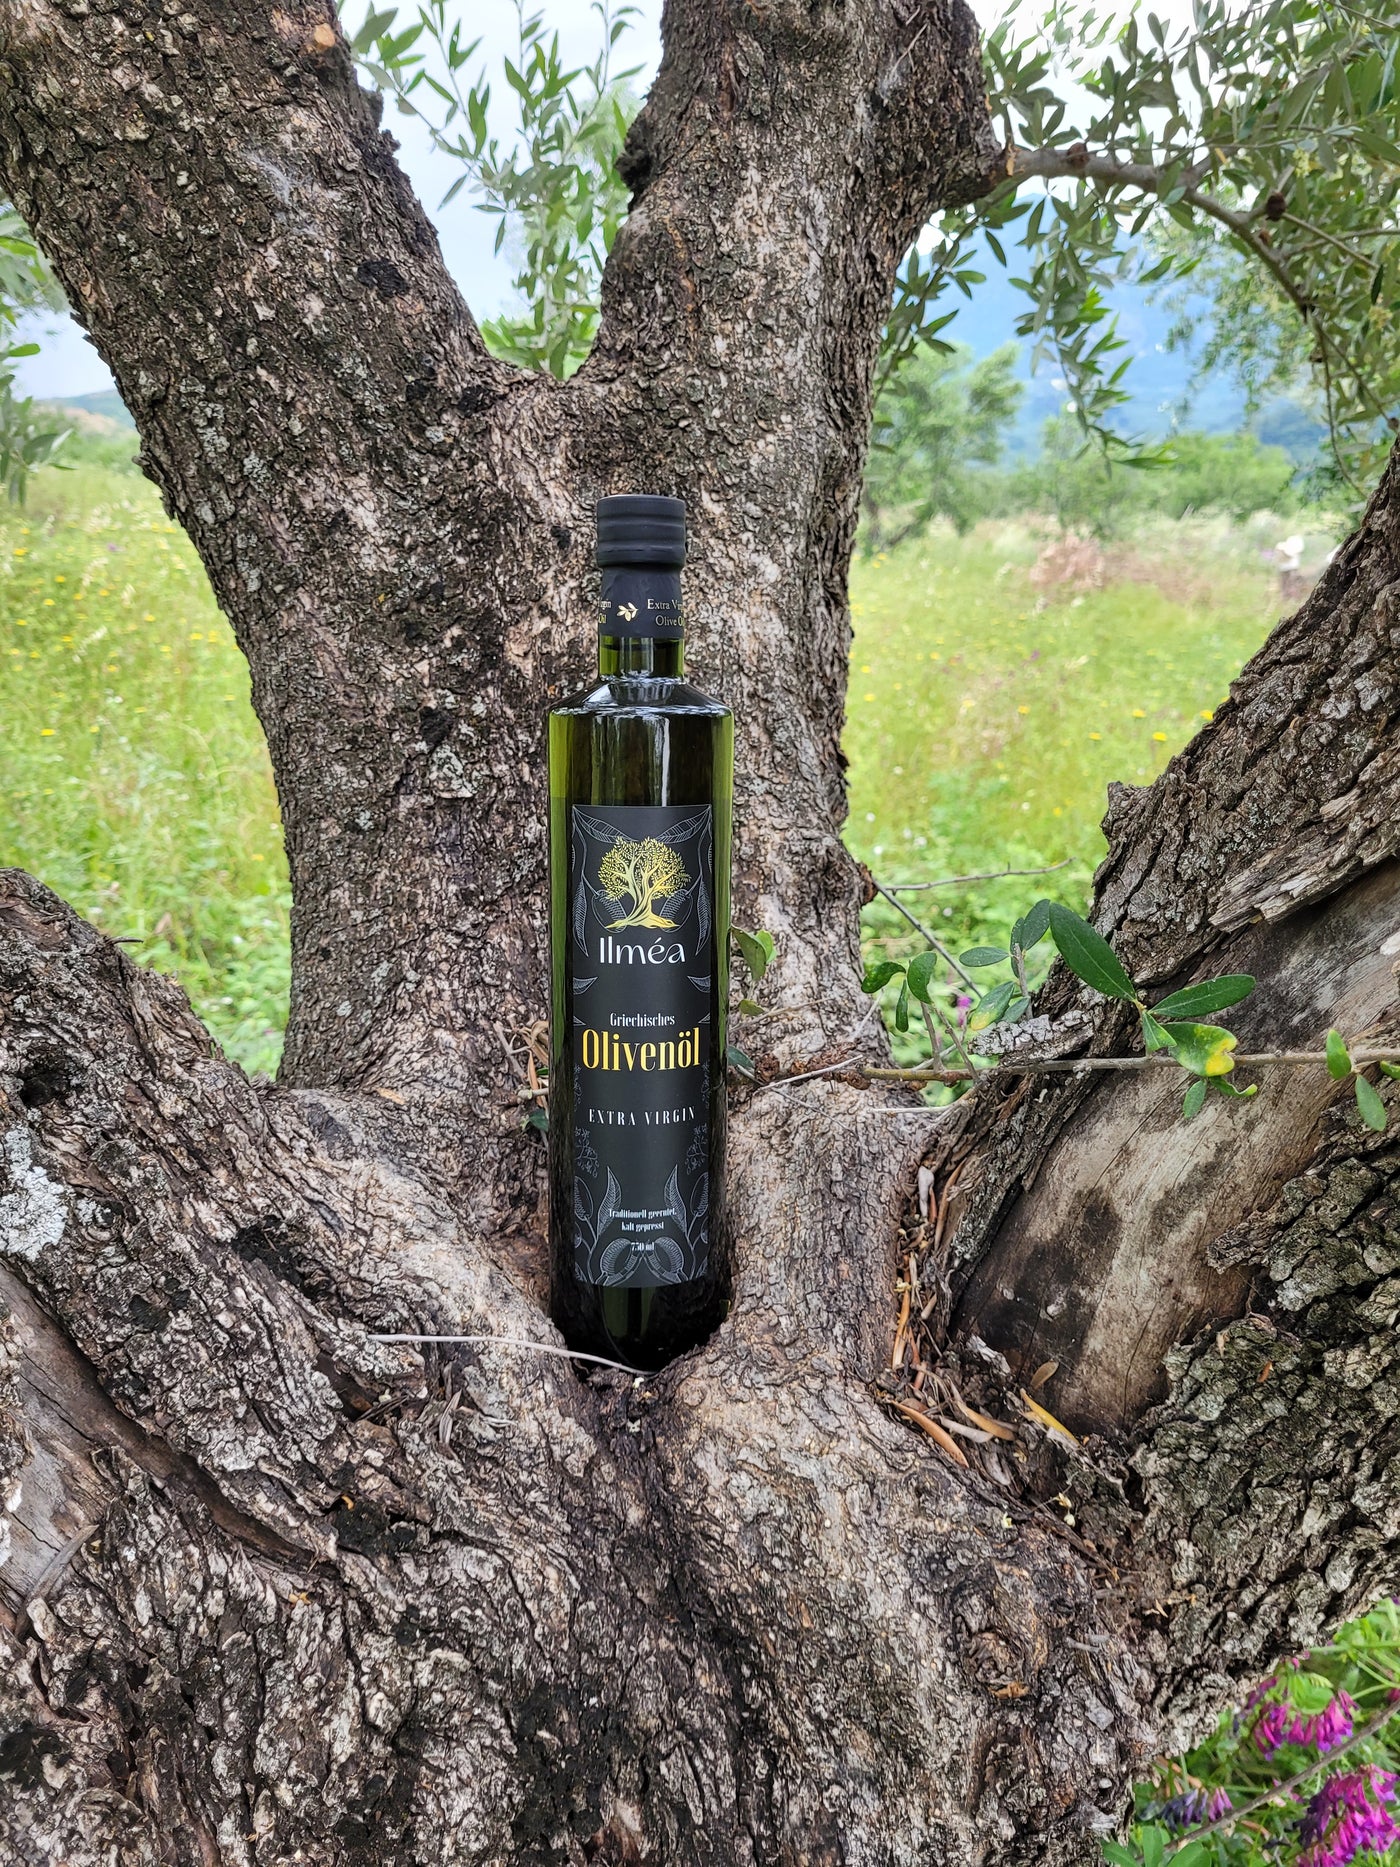 Ilmea Olivenöl Flasche im Olivenbaum